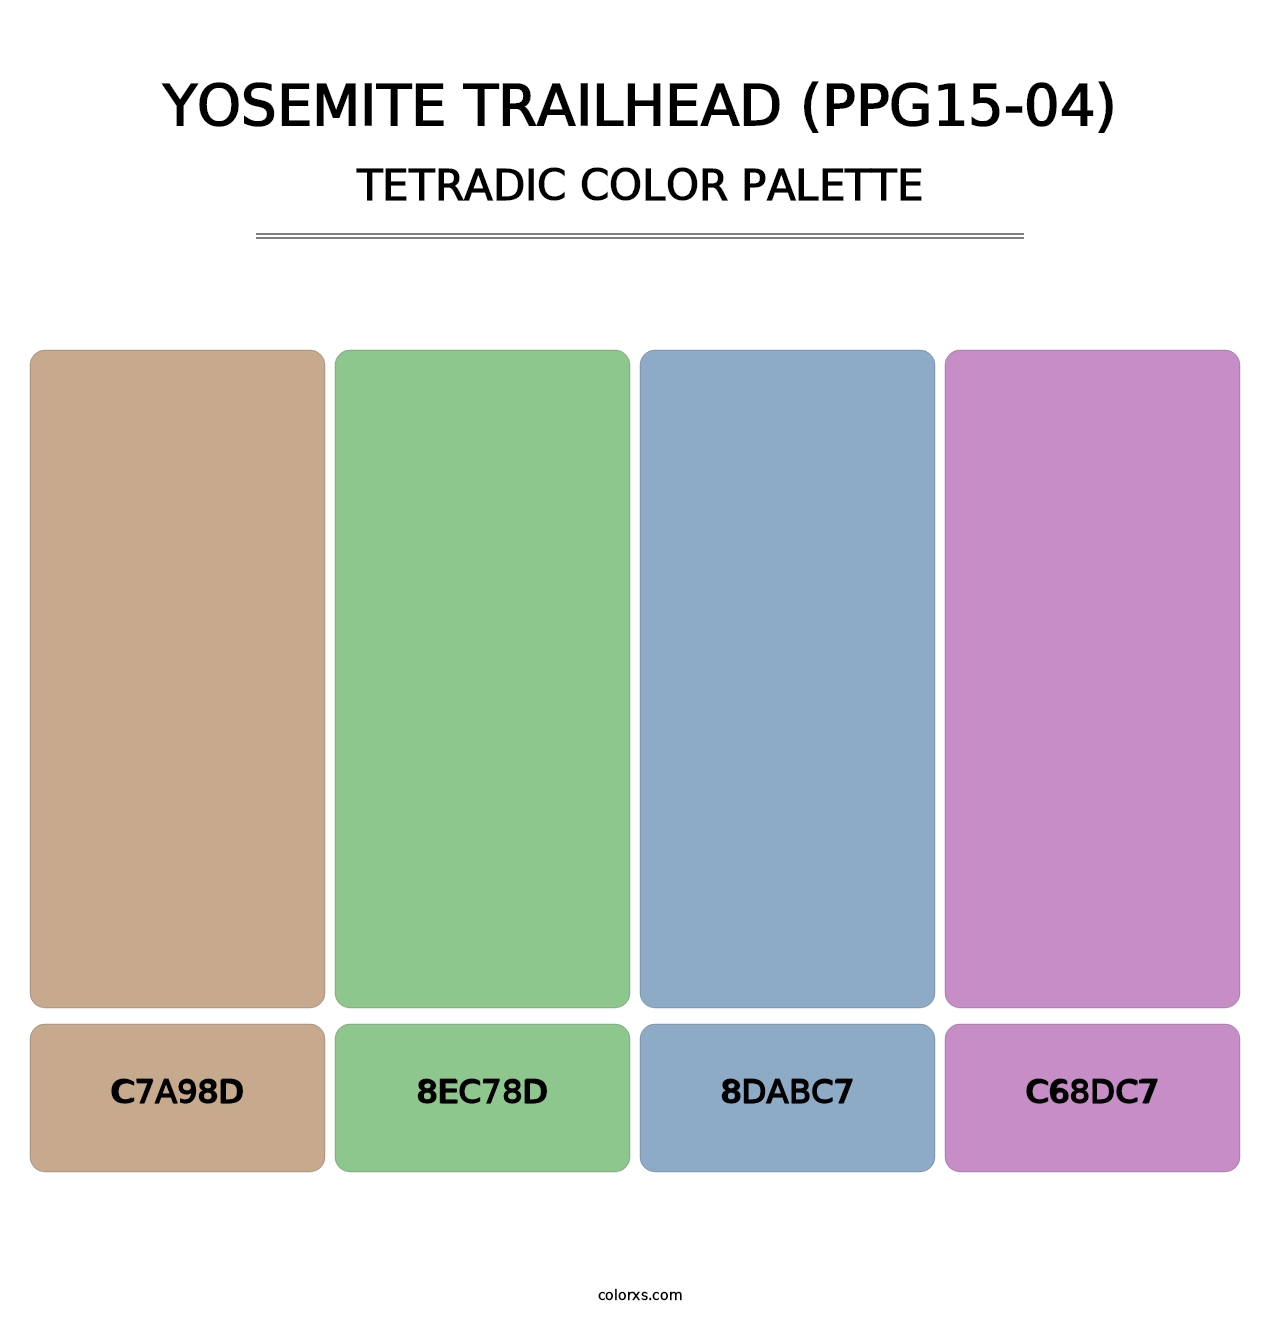 Yosemite Trailhead (PPG15-04) - Tetradic Color Palette